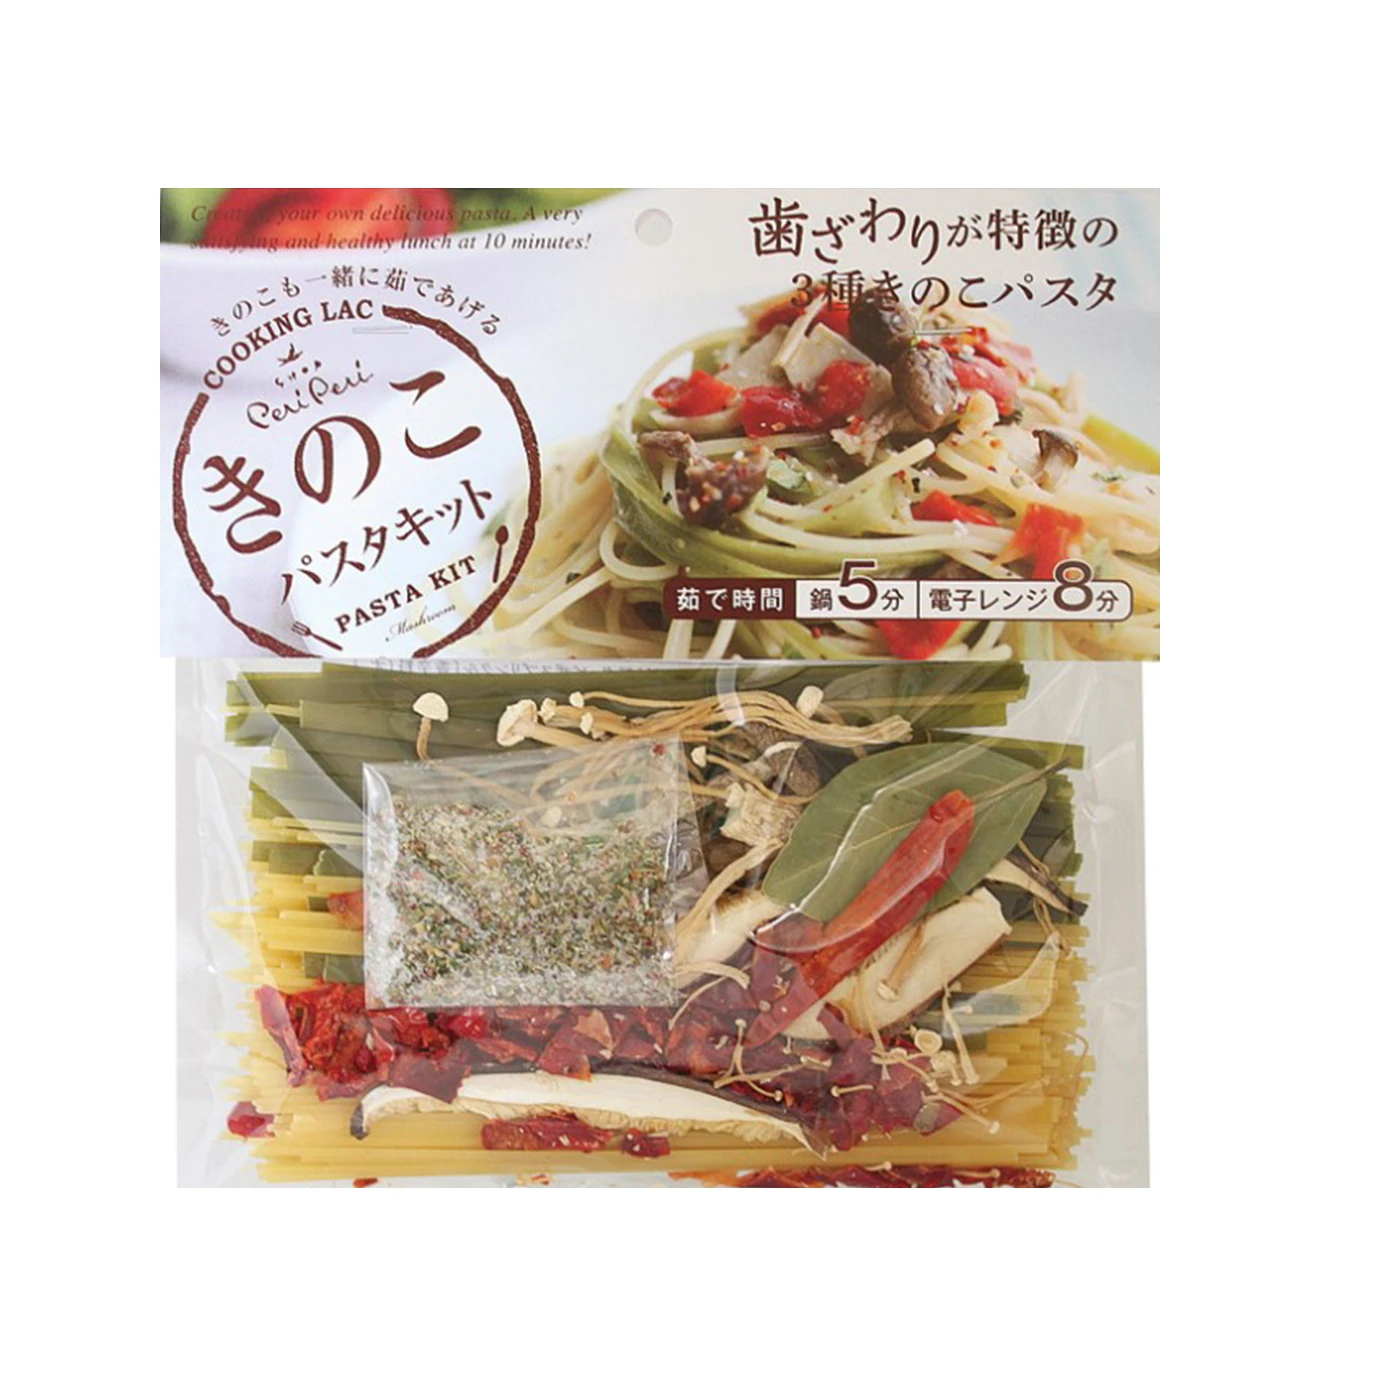 SEESCORE Japanese Buckwheat Udon Instant Wholesale Noodles Ramen